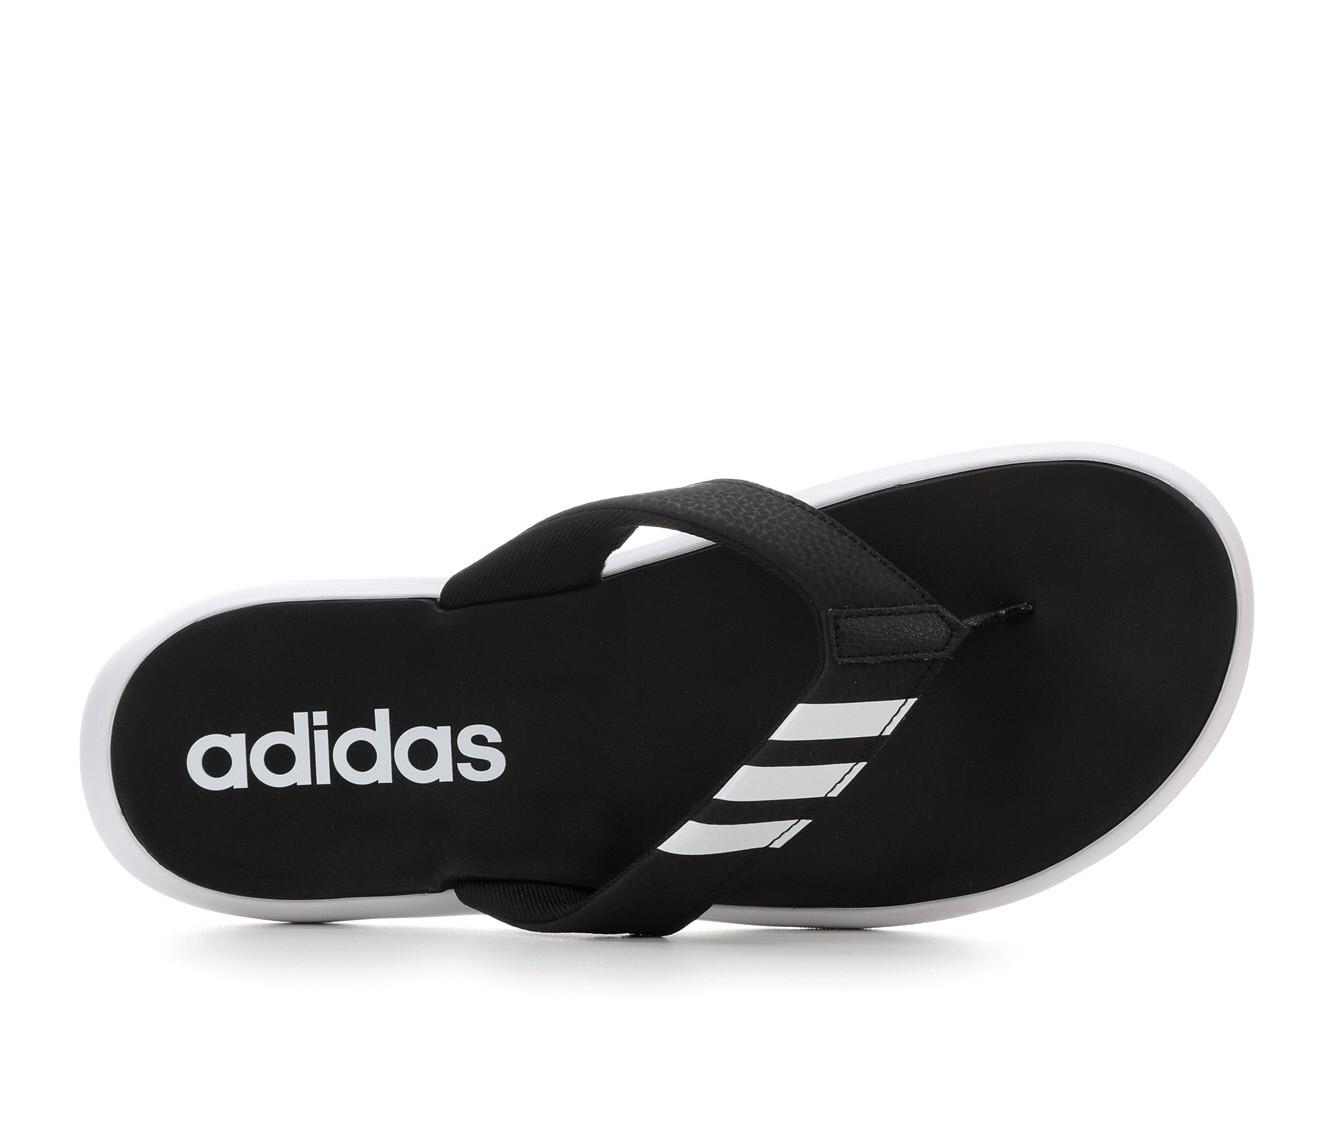 Adidas Flip-Flops Shoe Carnival